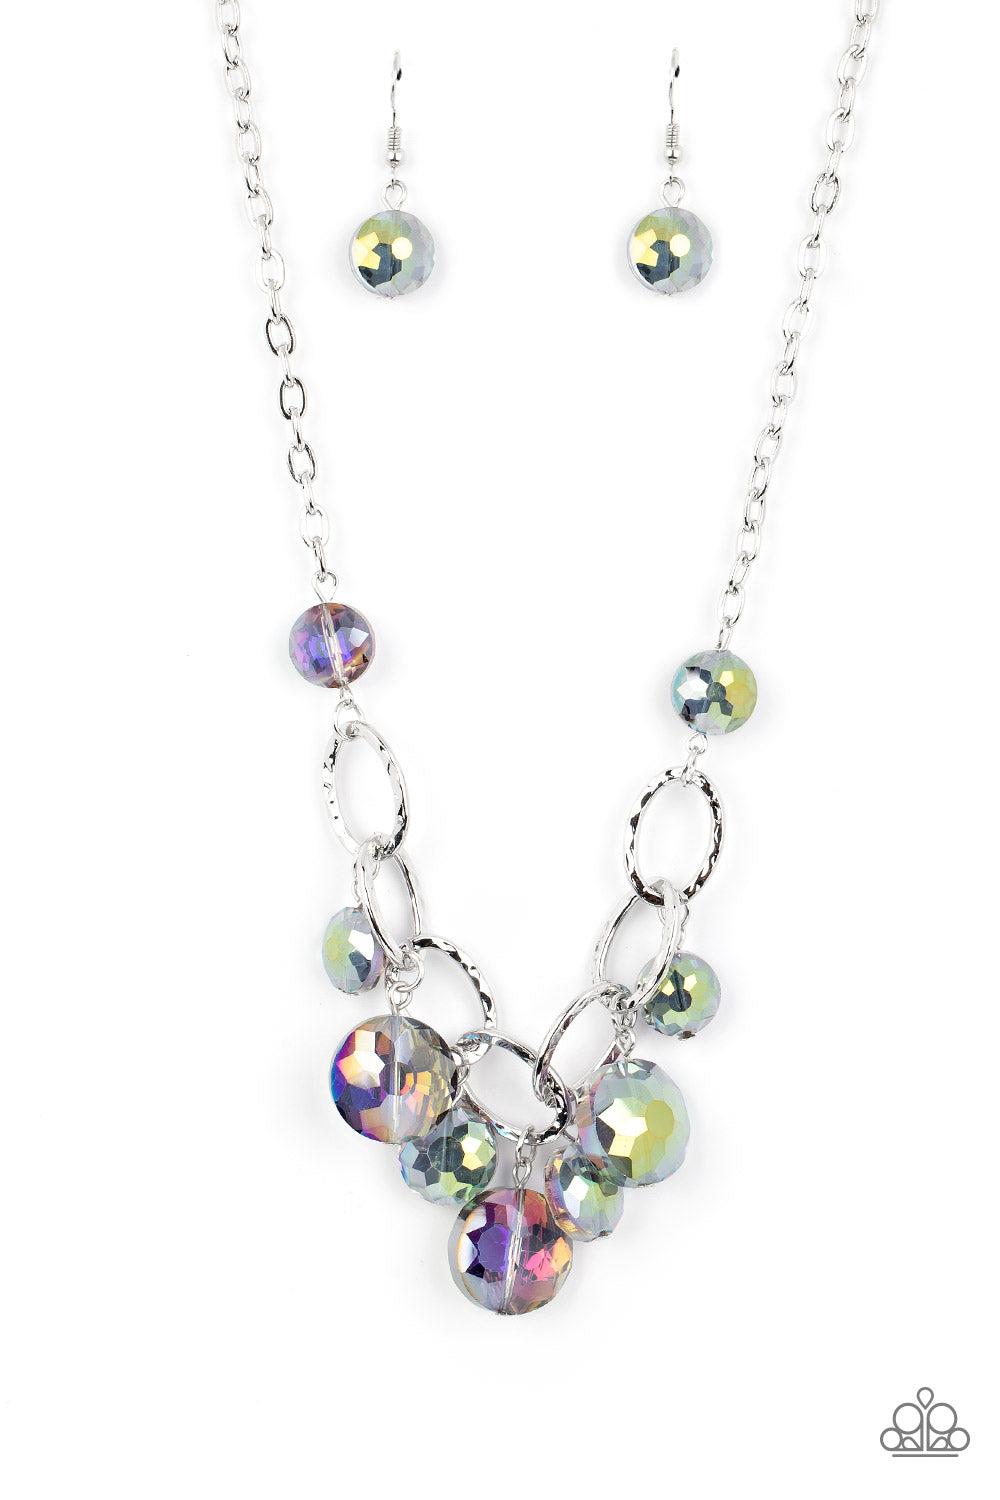 Rhinestone River Multi Purple Oil Spill Necklace - Paparazzi Accessories- lightbox - CarasShop.com - $5 Jewelry by Cara Jewels